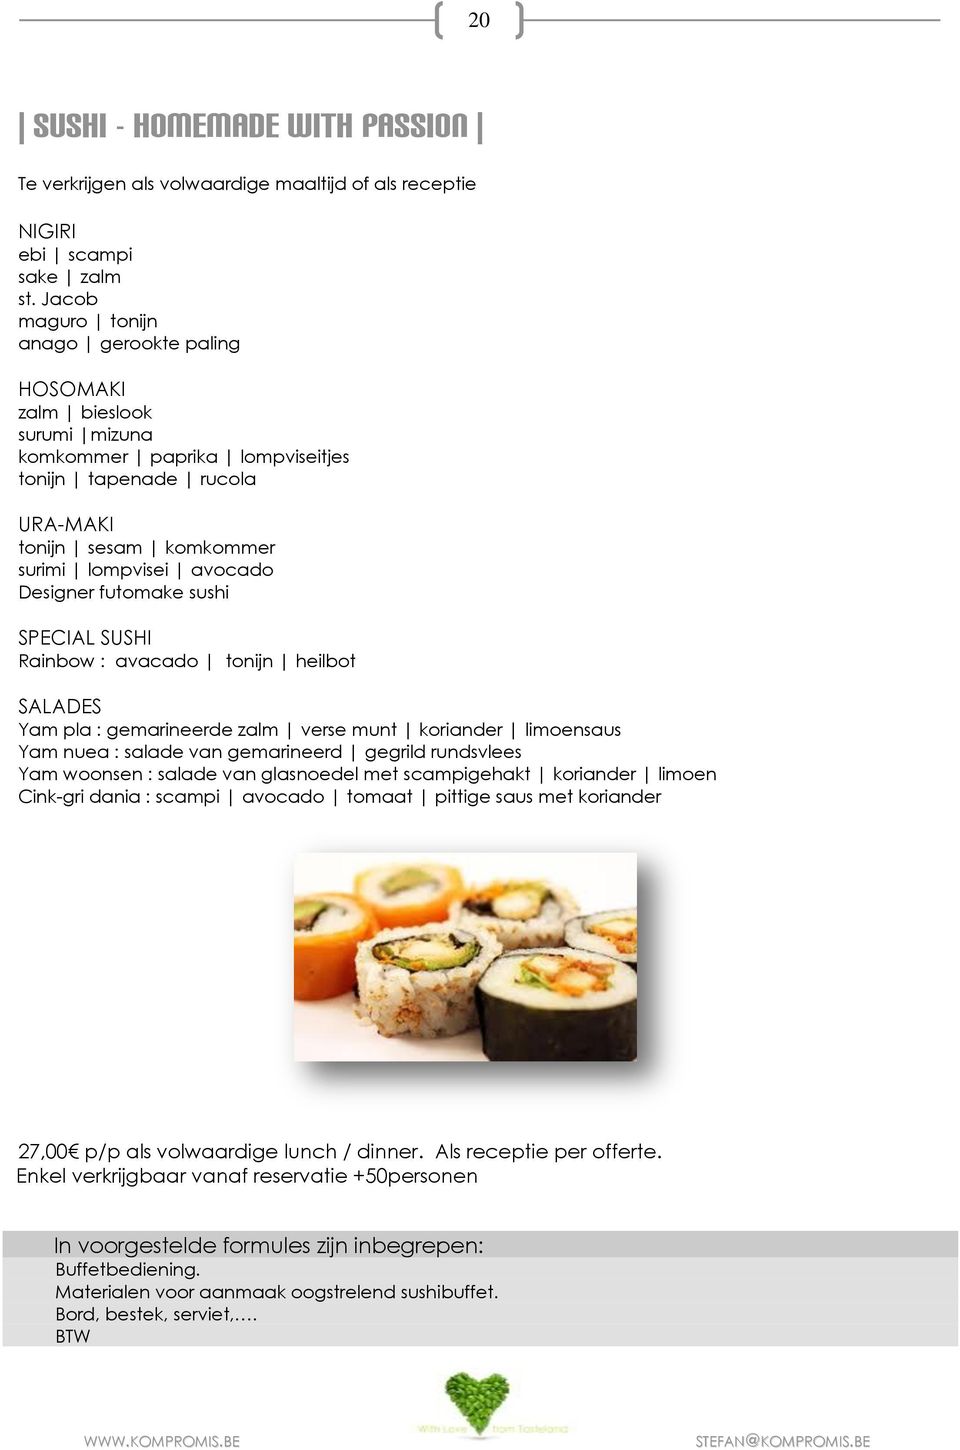 futomake sushi SPECIAL SUSHI Rainbow : avacado tonijn heilbot SALADES Yam pla : gemarineerde zalm verse munt koriander limoensaus Yam nuea : salade van gemarineerd gegrild rundsvlees Yam woonsen :